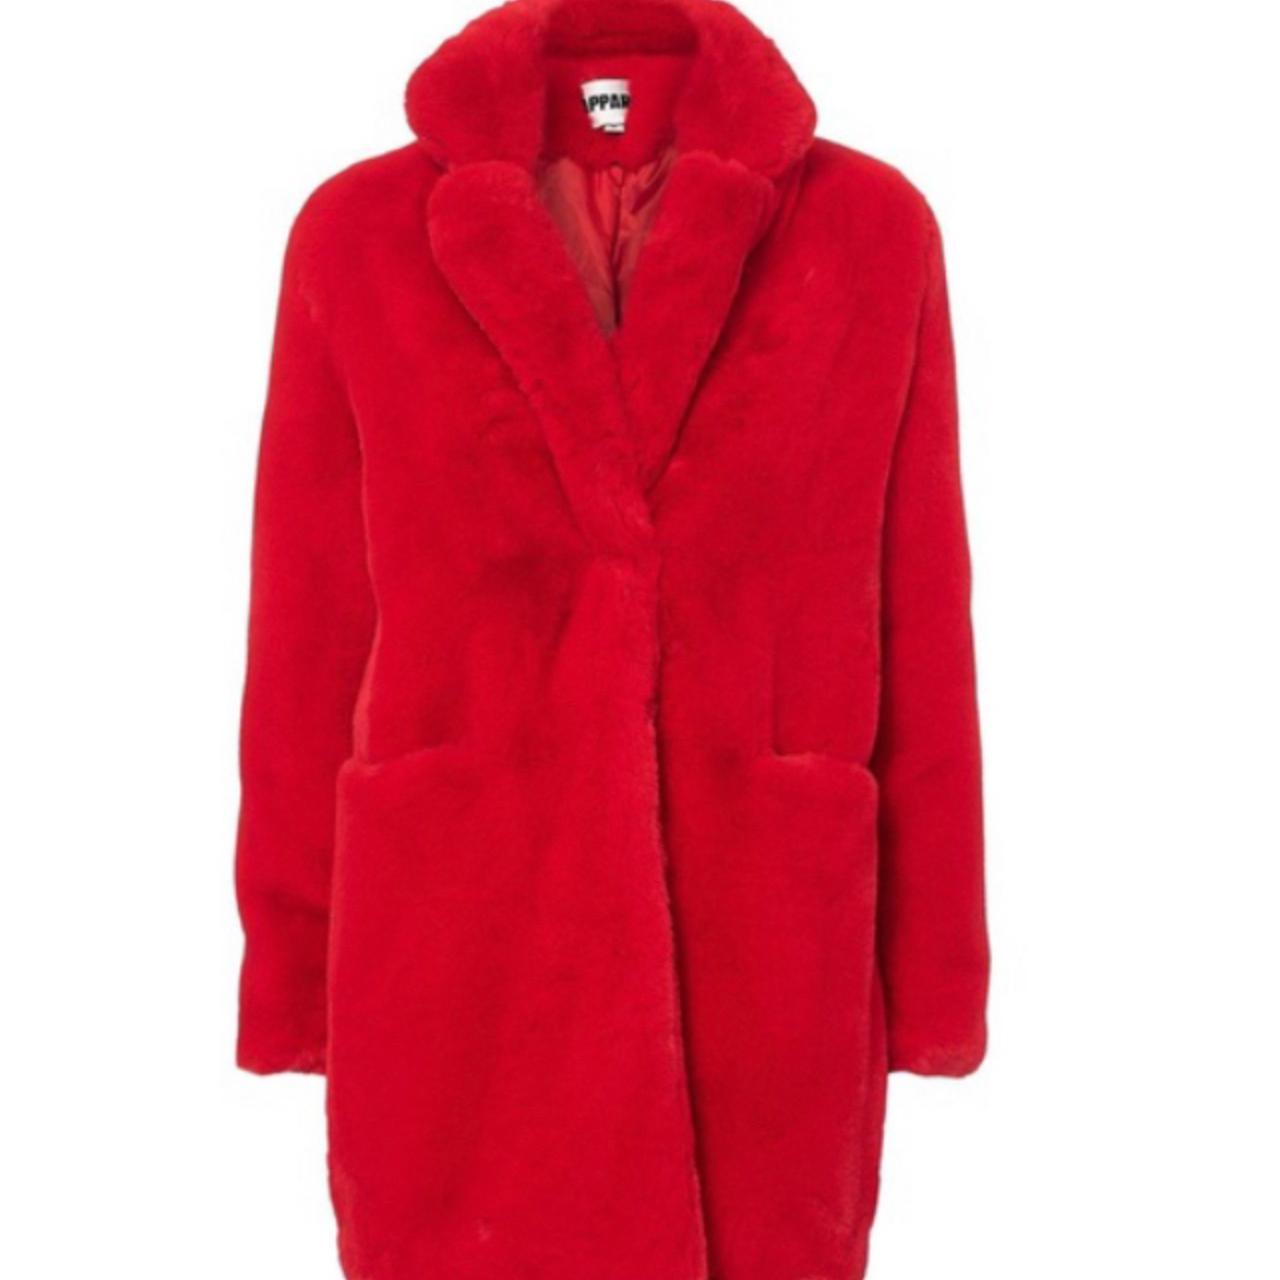 Apparis Women's Red Coat (2)